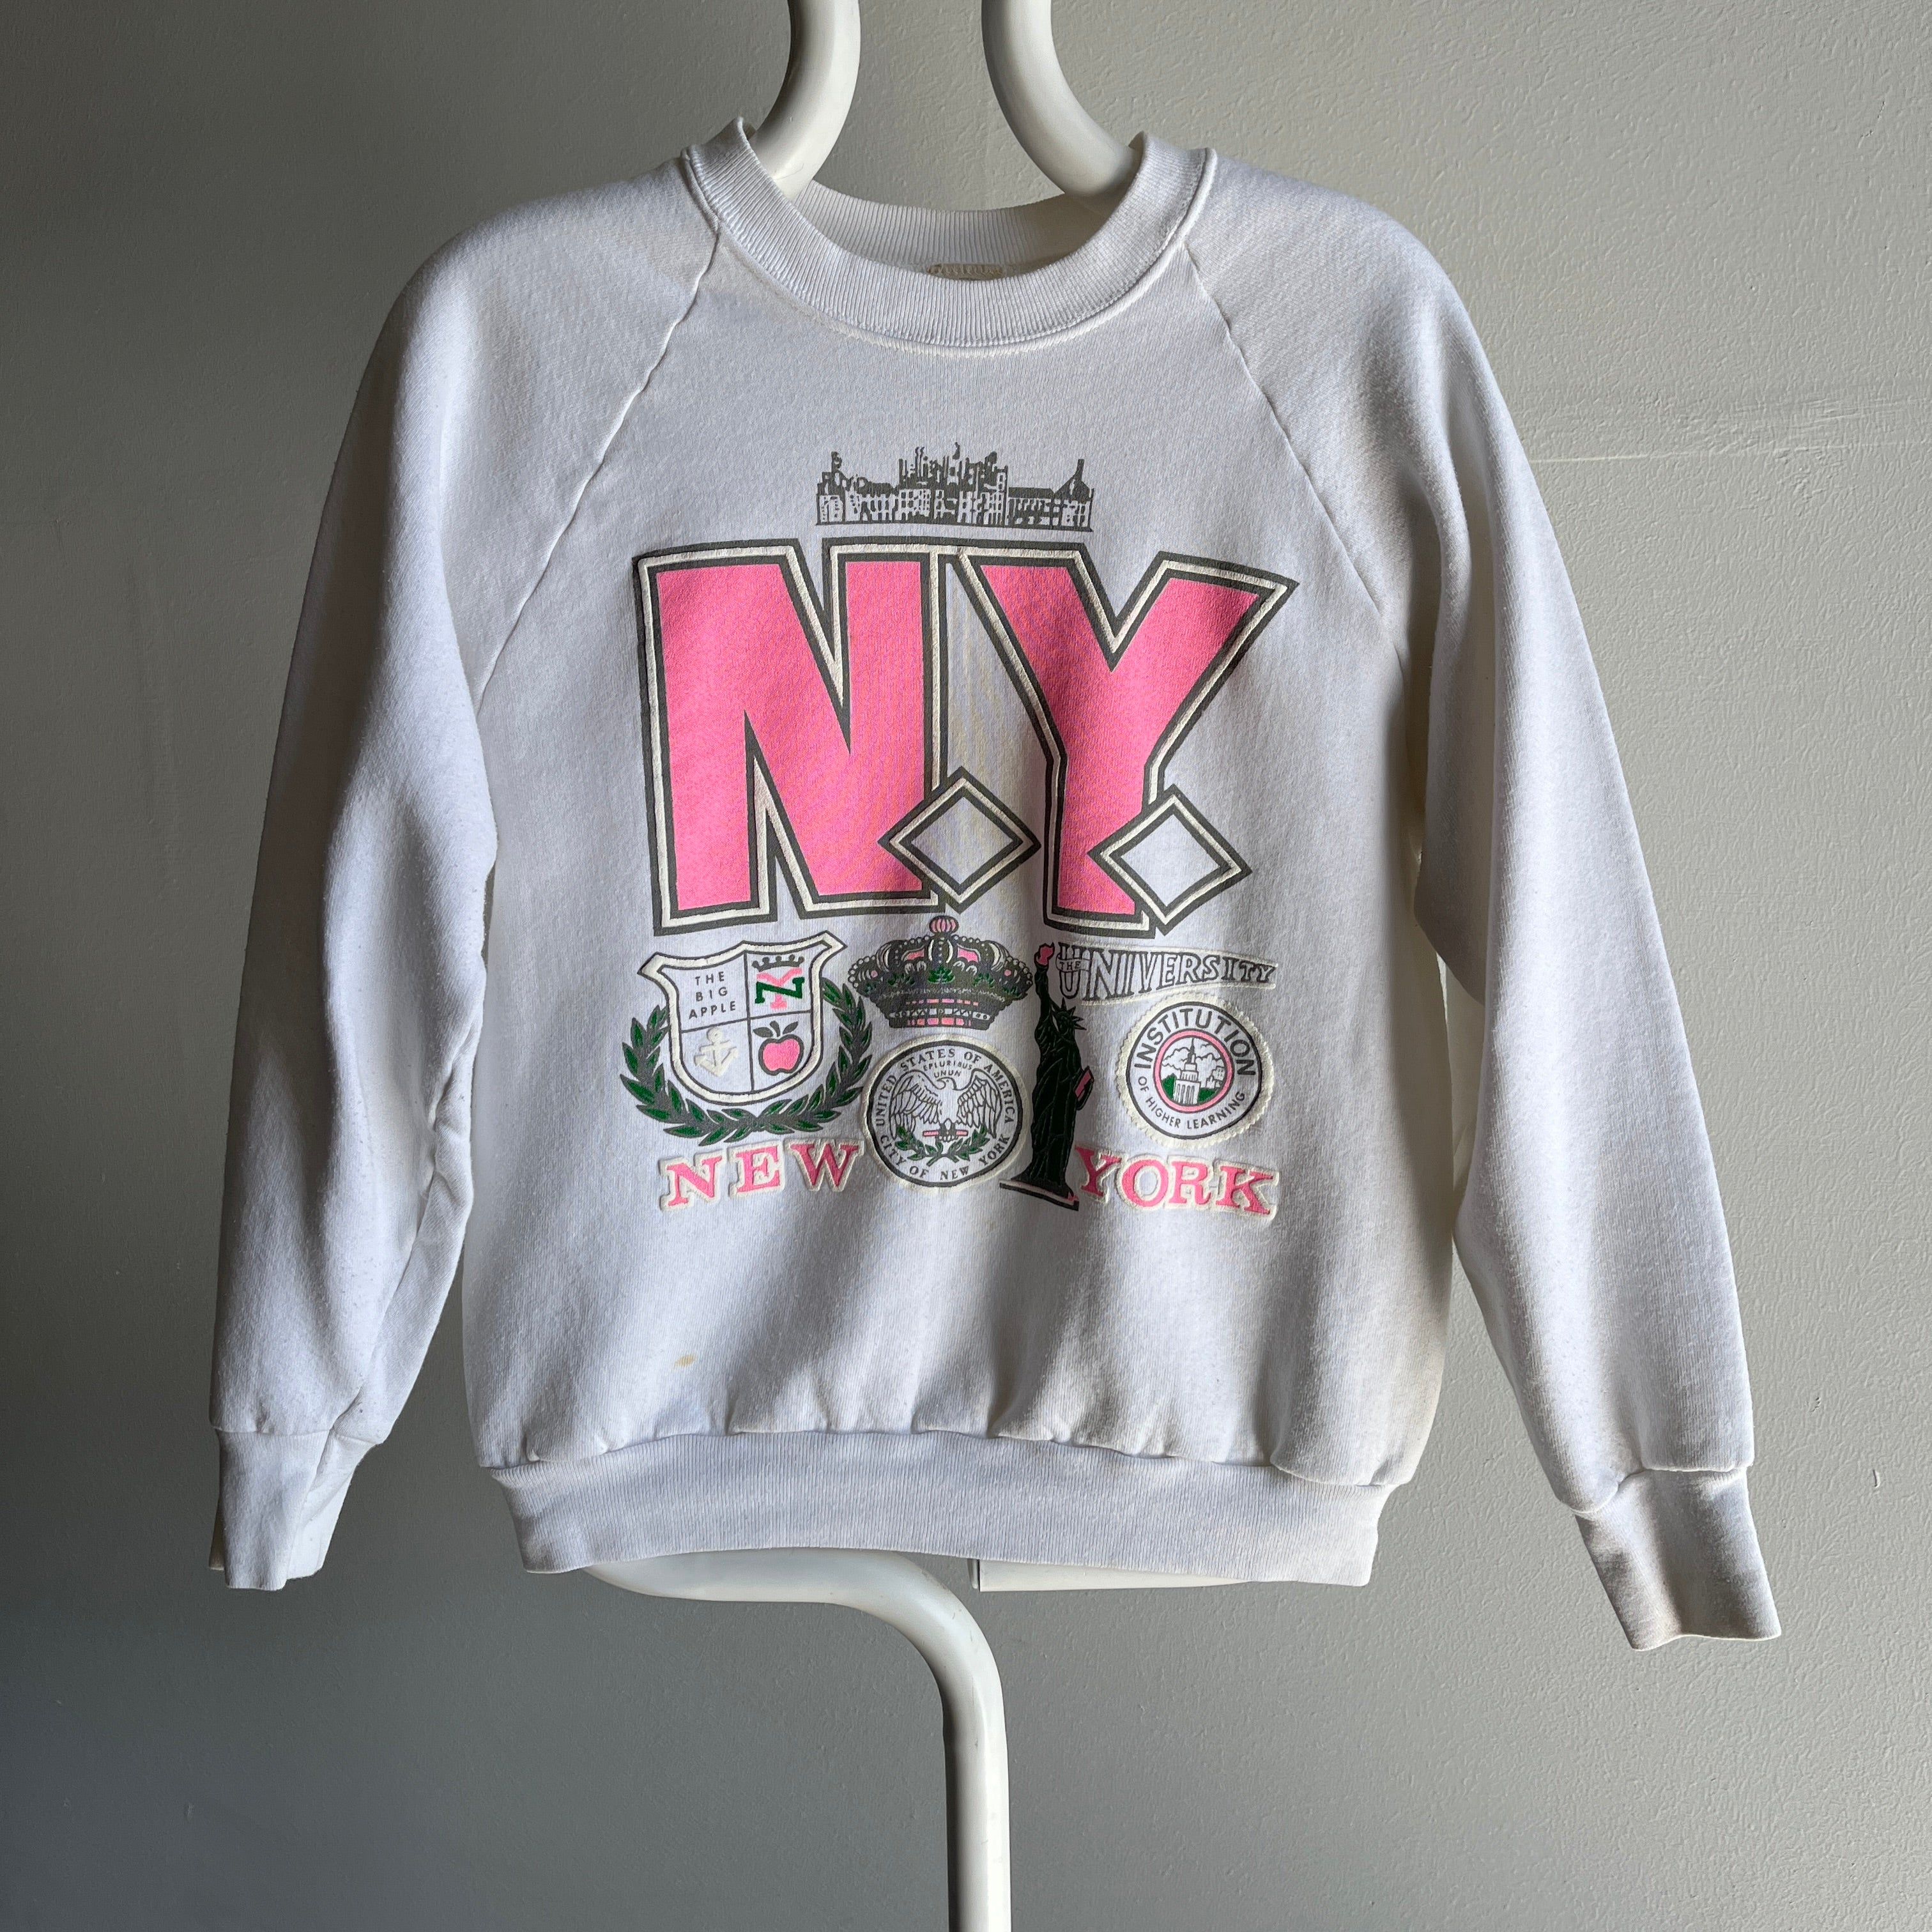 1980s NYU Sweatshirt by FOTL - RAD/Stained!